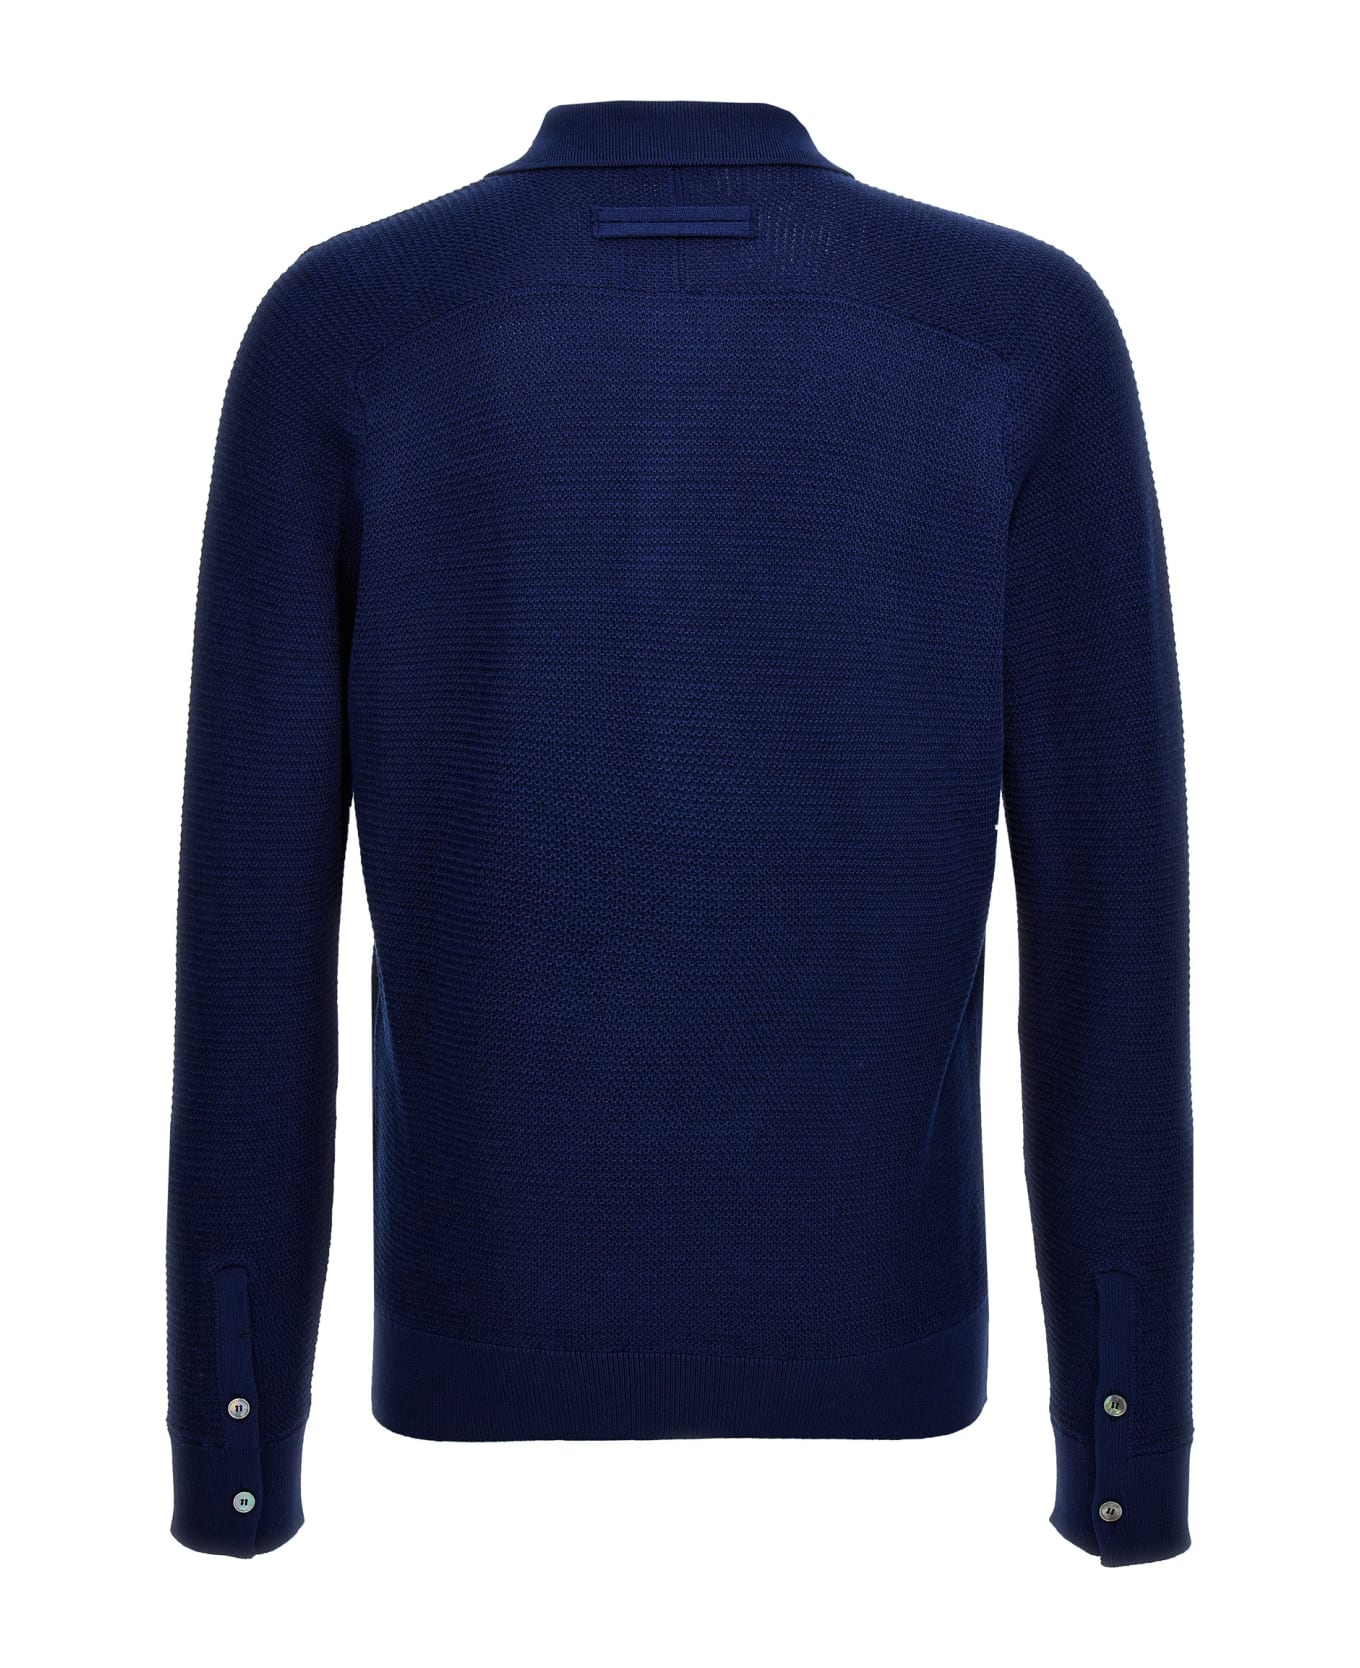 Zegna Polo Sweater - Blue